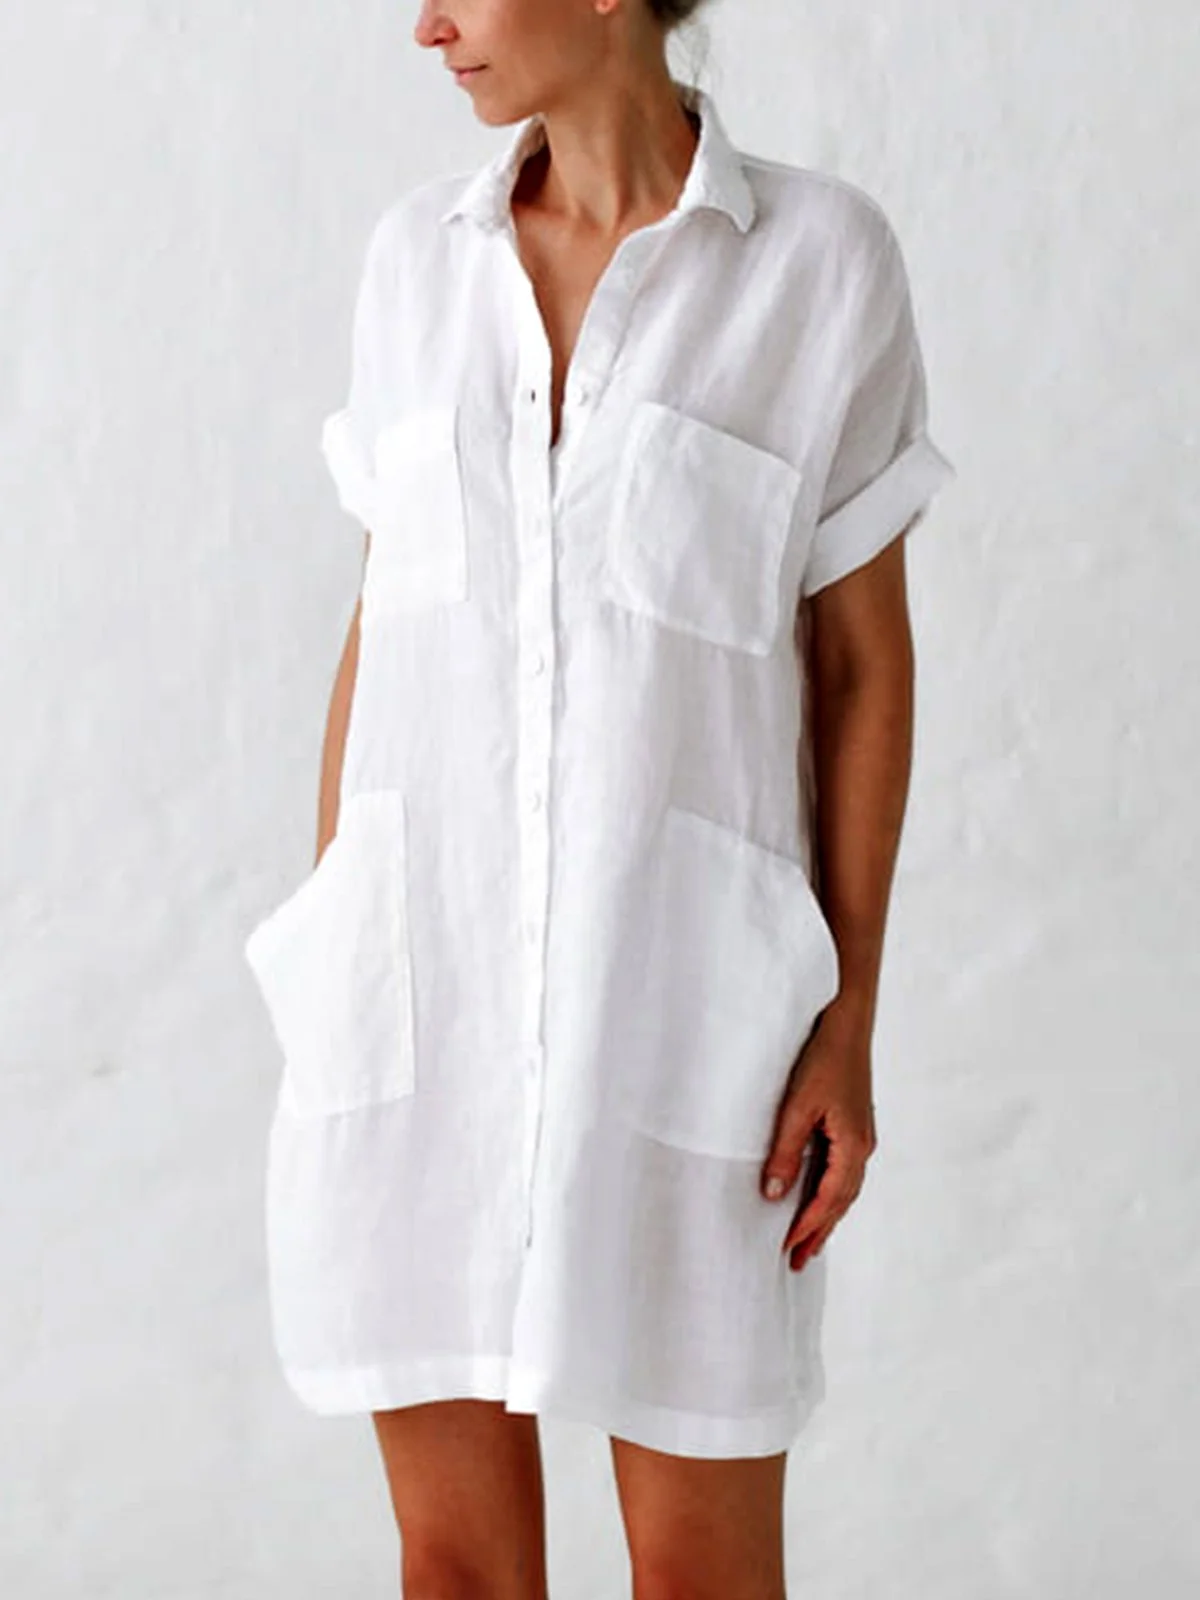 Plus Size Women Solid V Neck Cotton Short Sleeveless Loose Casual Shirt Dress